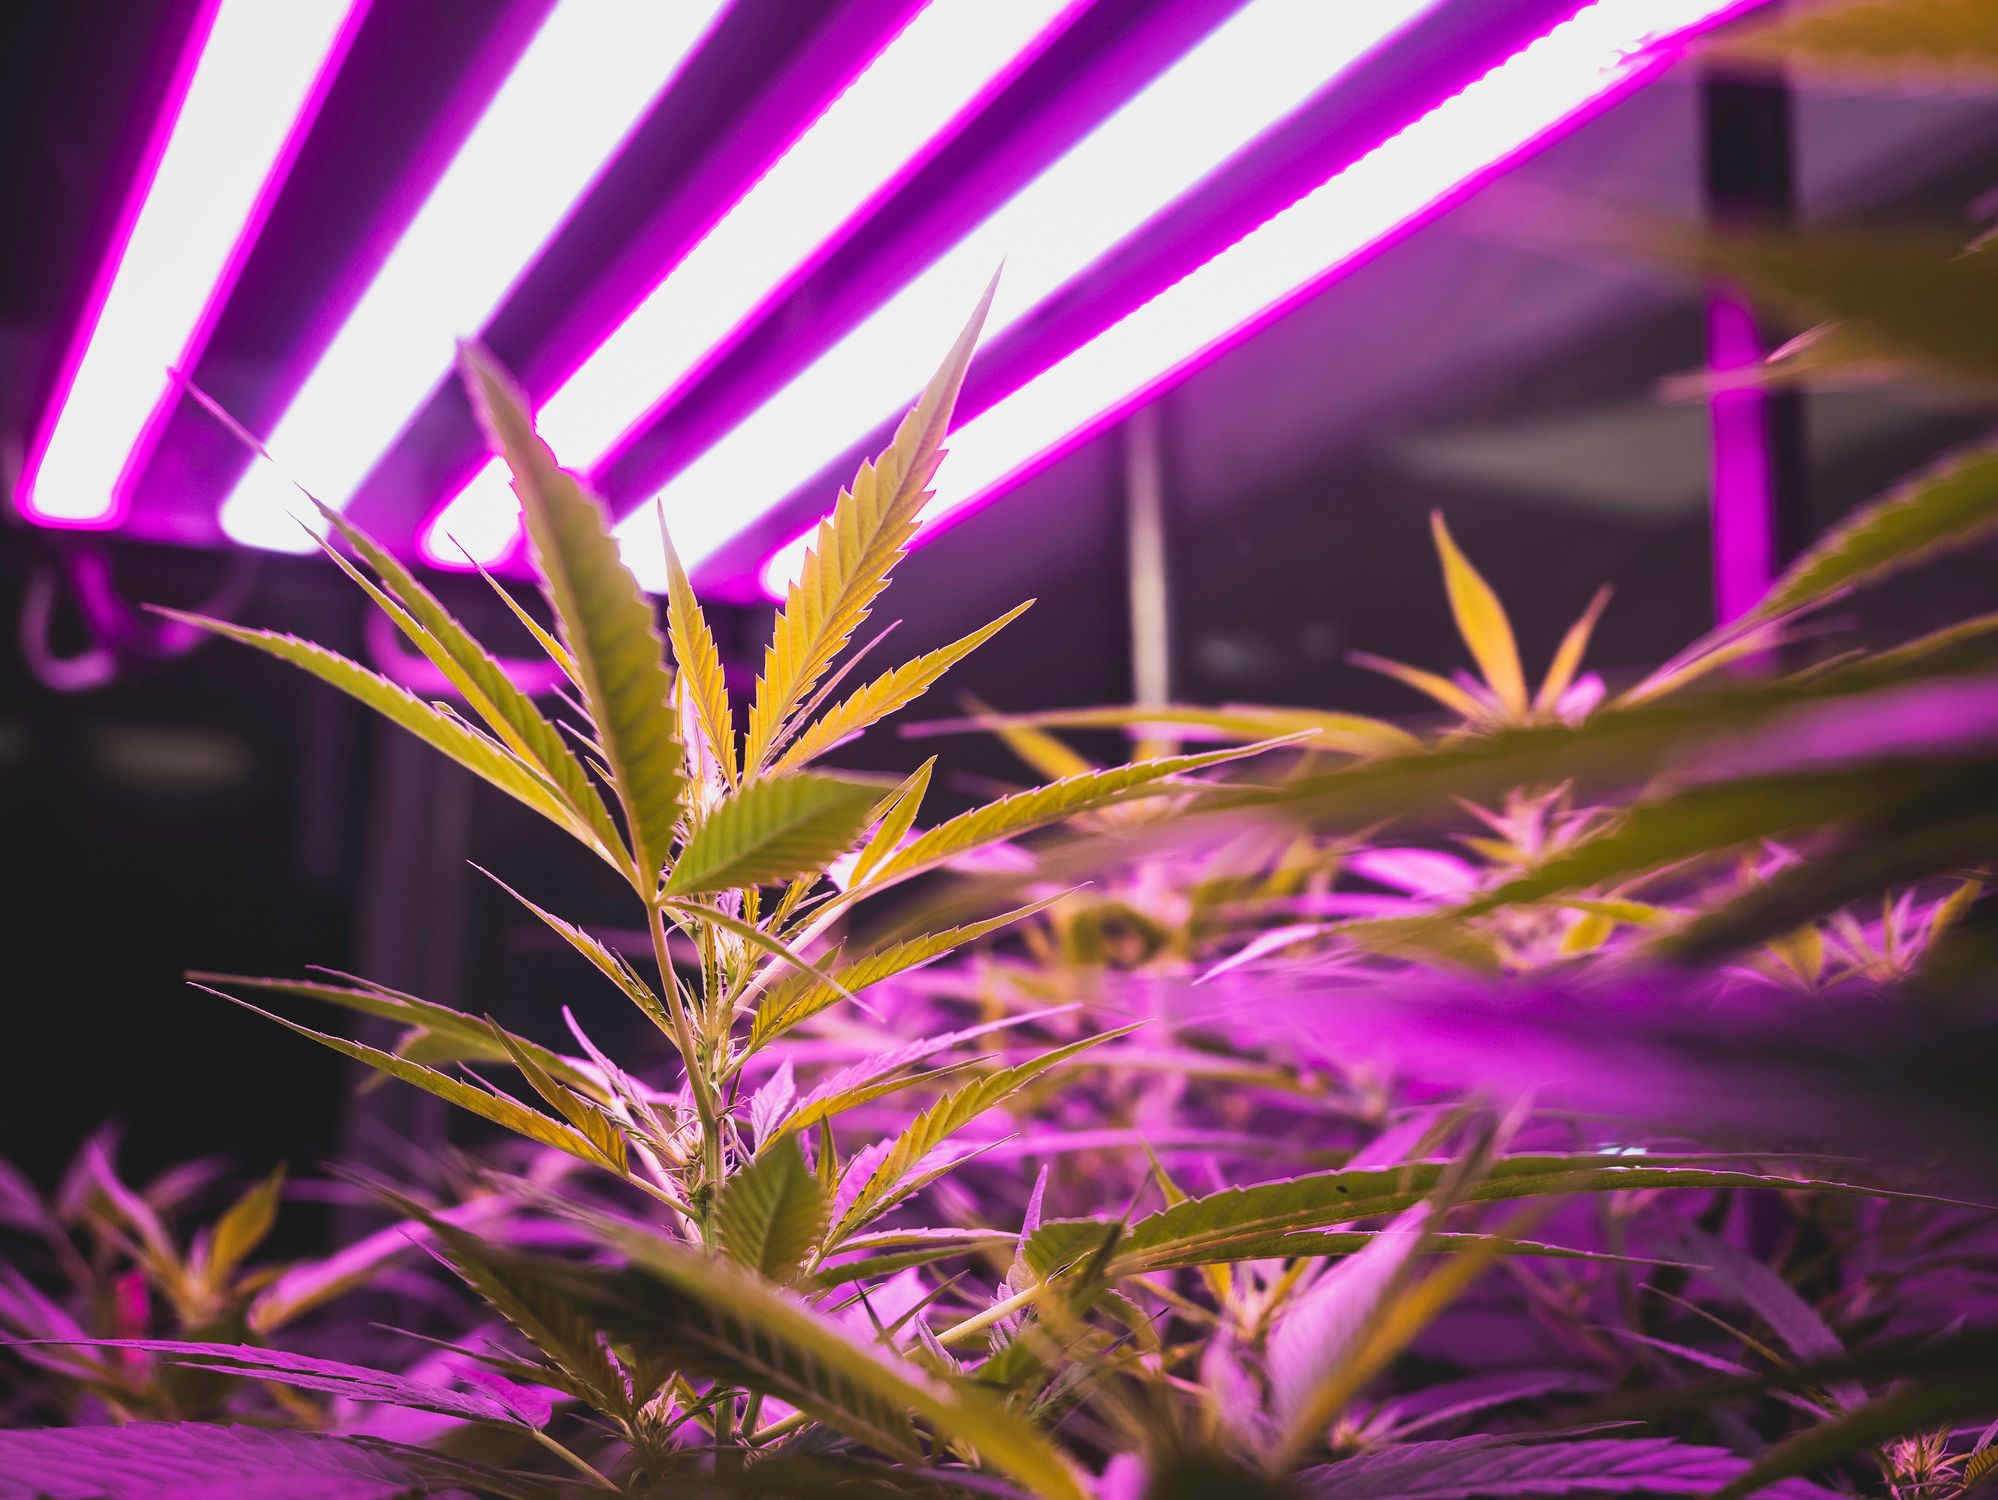 Cannabis plants growing indoors underneath grow lights